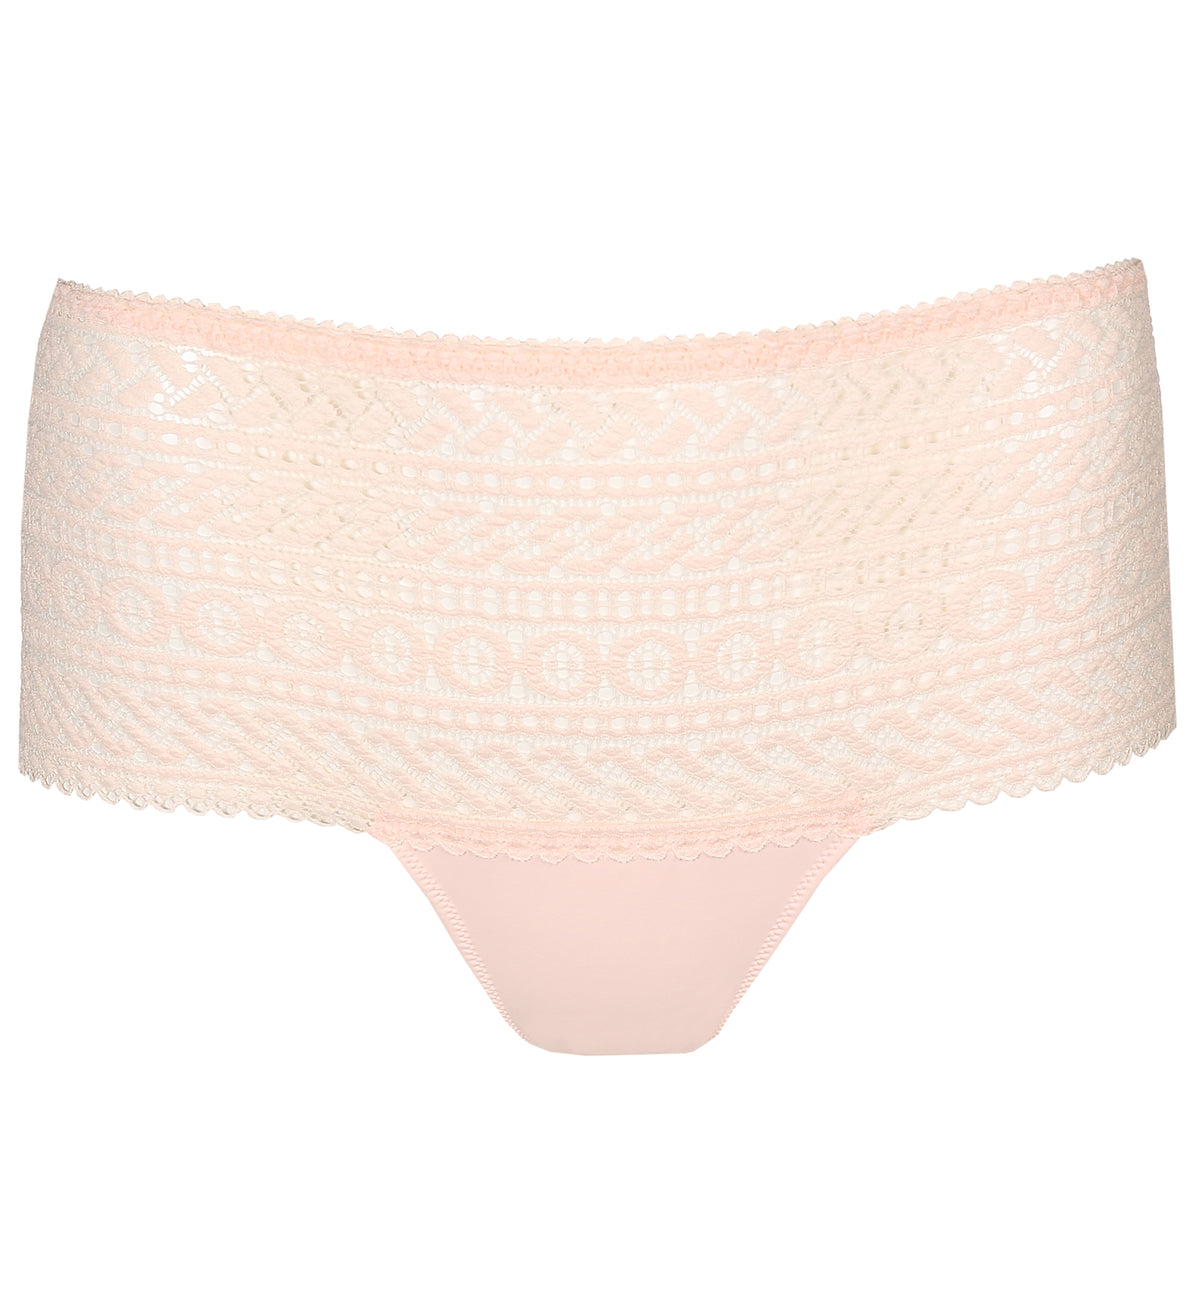 PrimaDonna Montara Matching Luxury Thong (0663381),Small,Crystal Pink - Crystal Pink,Small